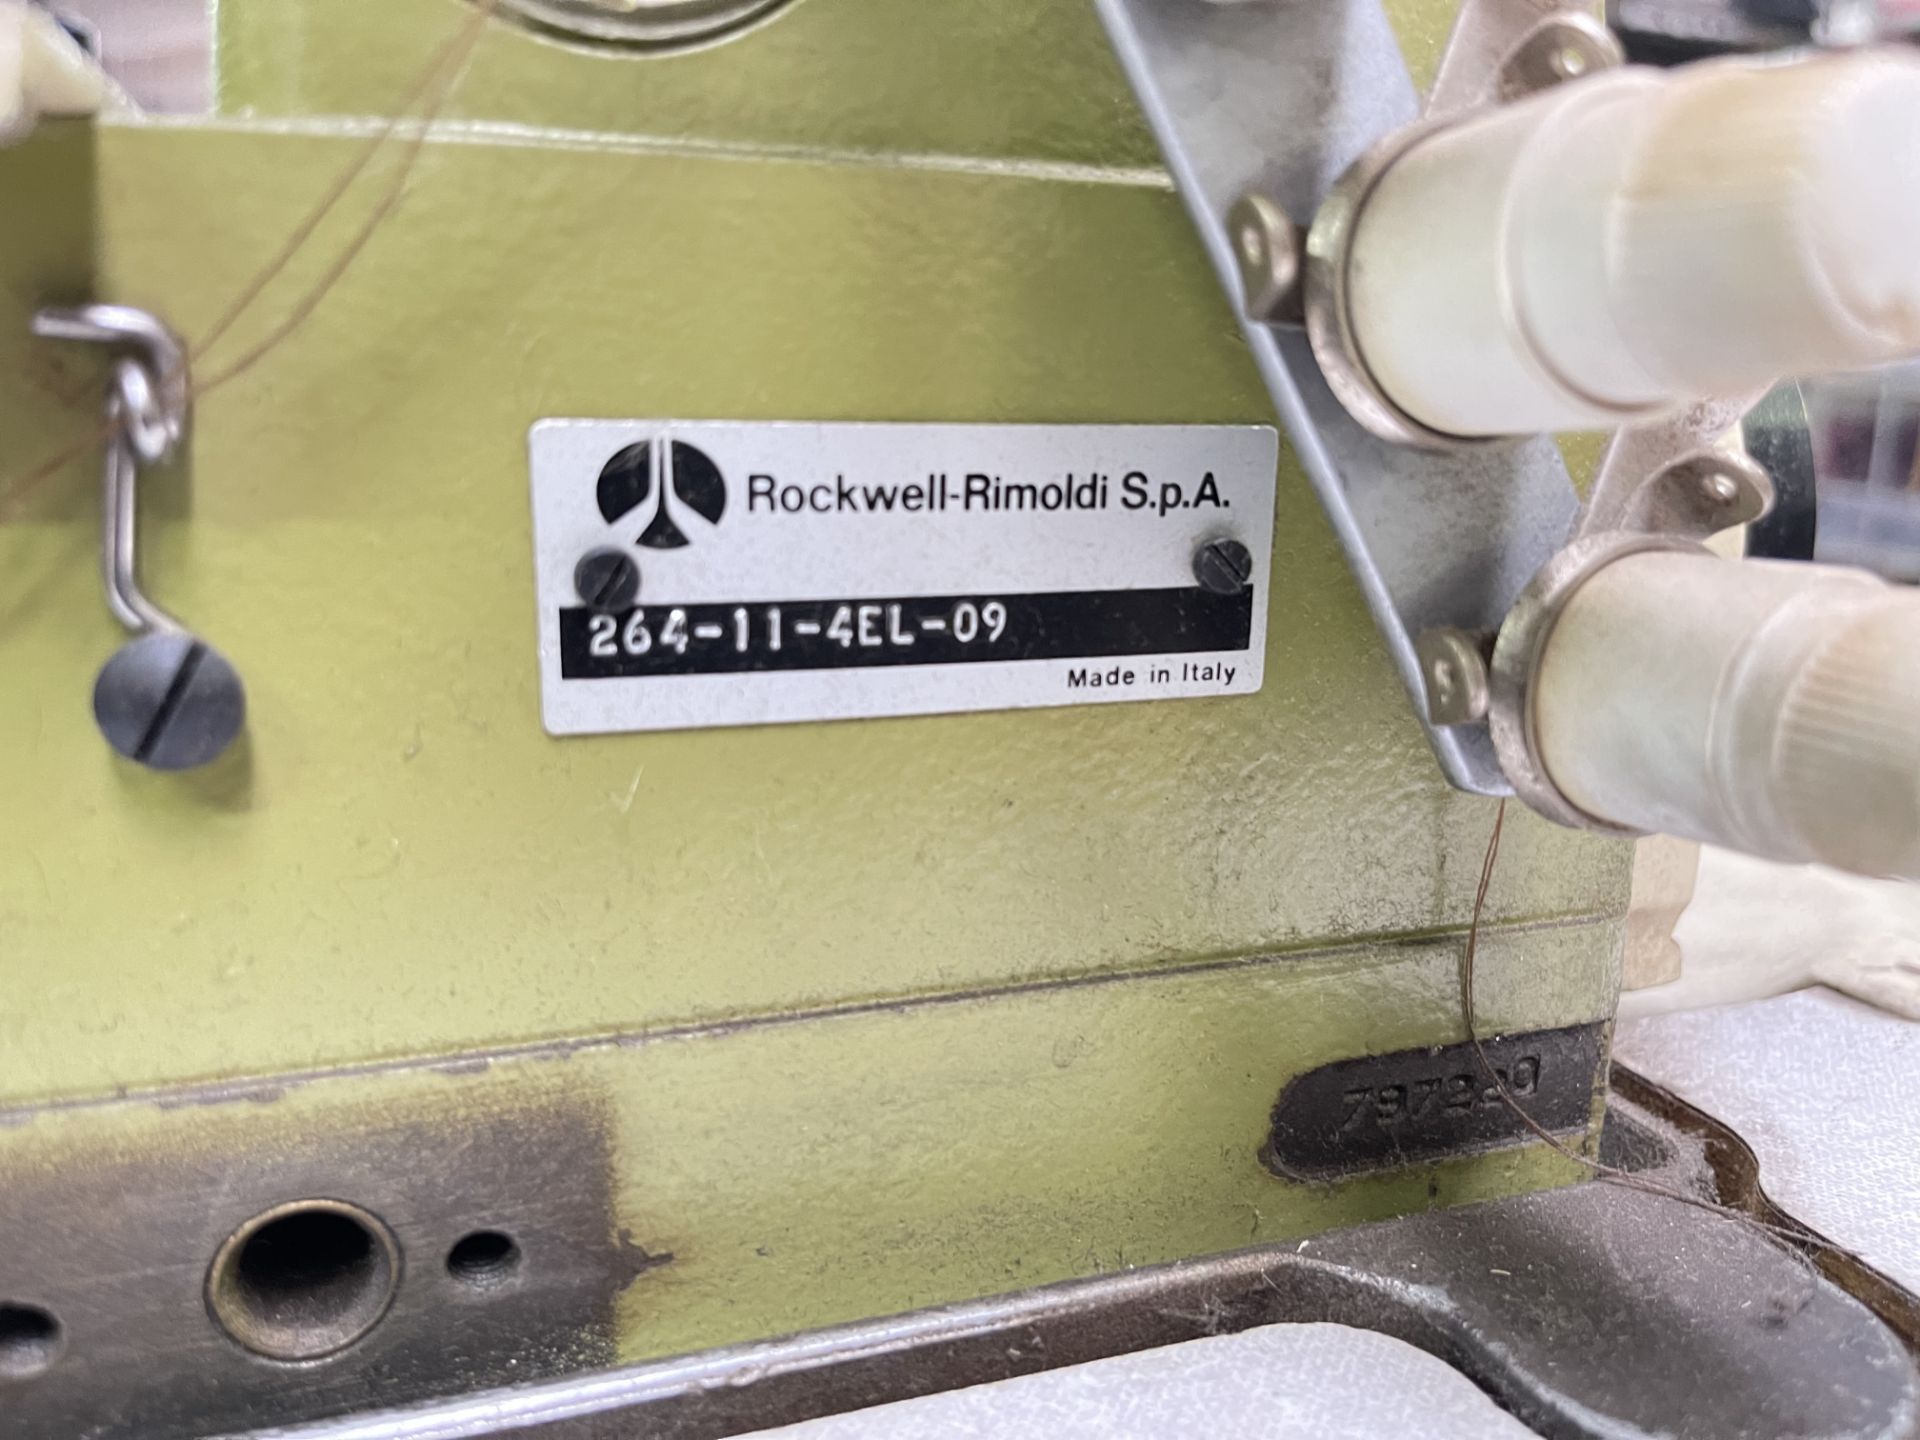 Rimoldi 264-11-4EL-09 Industrial Sewing Machine - Image 10 of 12